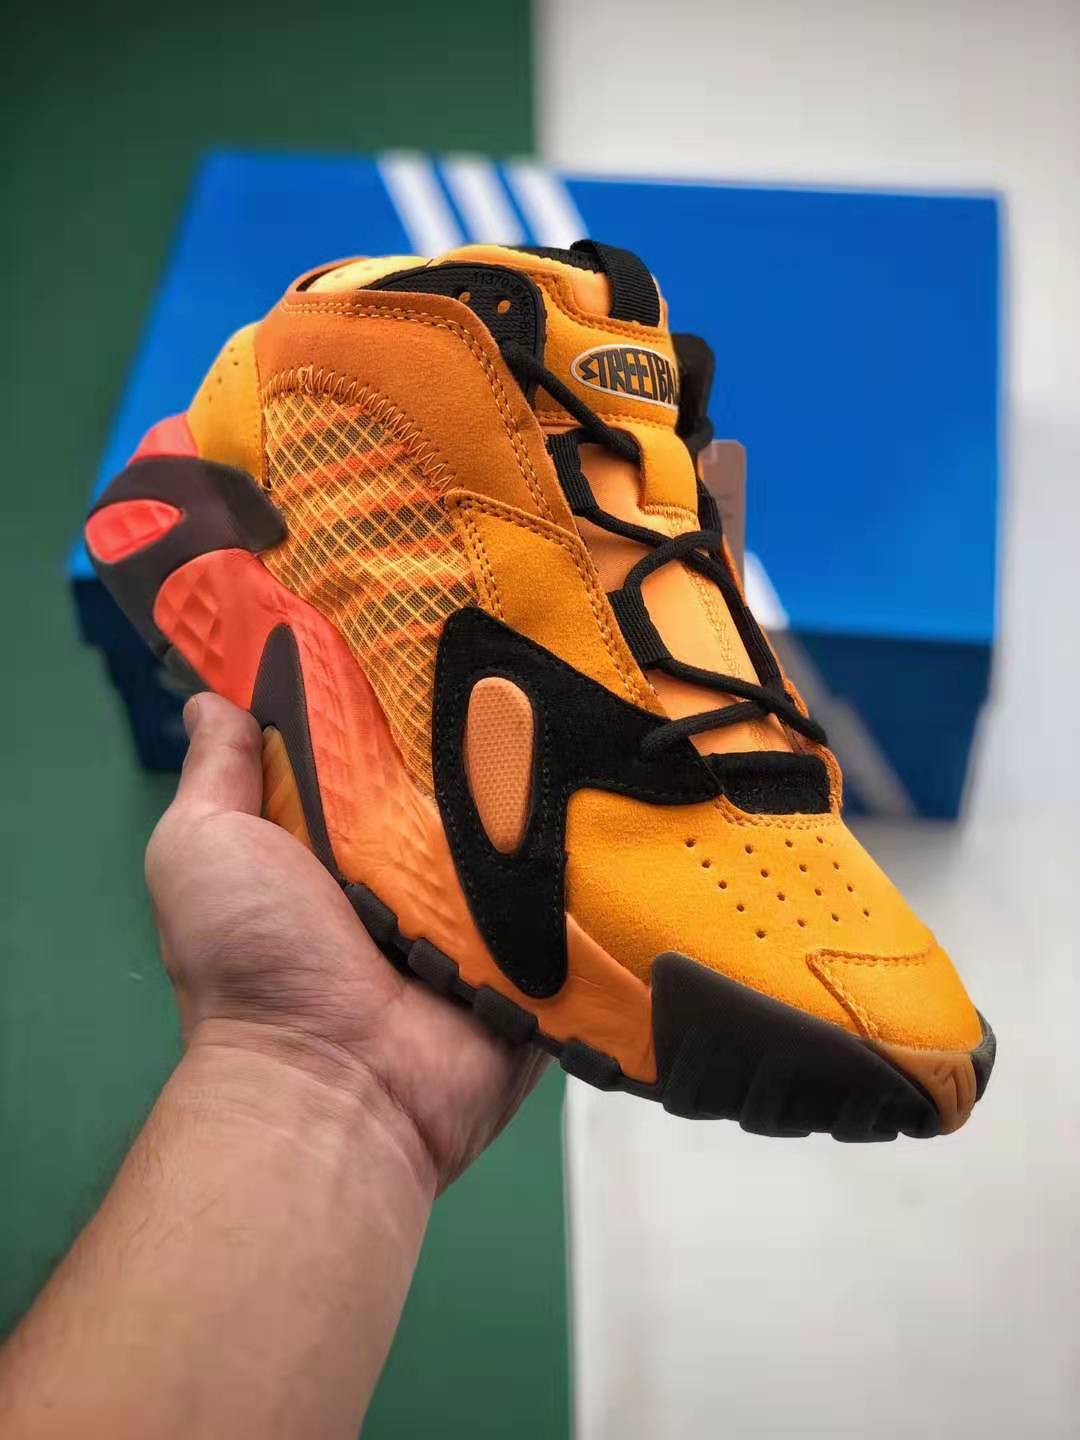 Adidas Streetball Flash Orange EF9598 - Stylish and Versatile Basketball Sneakers